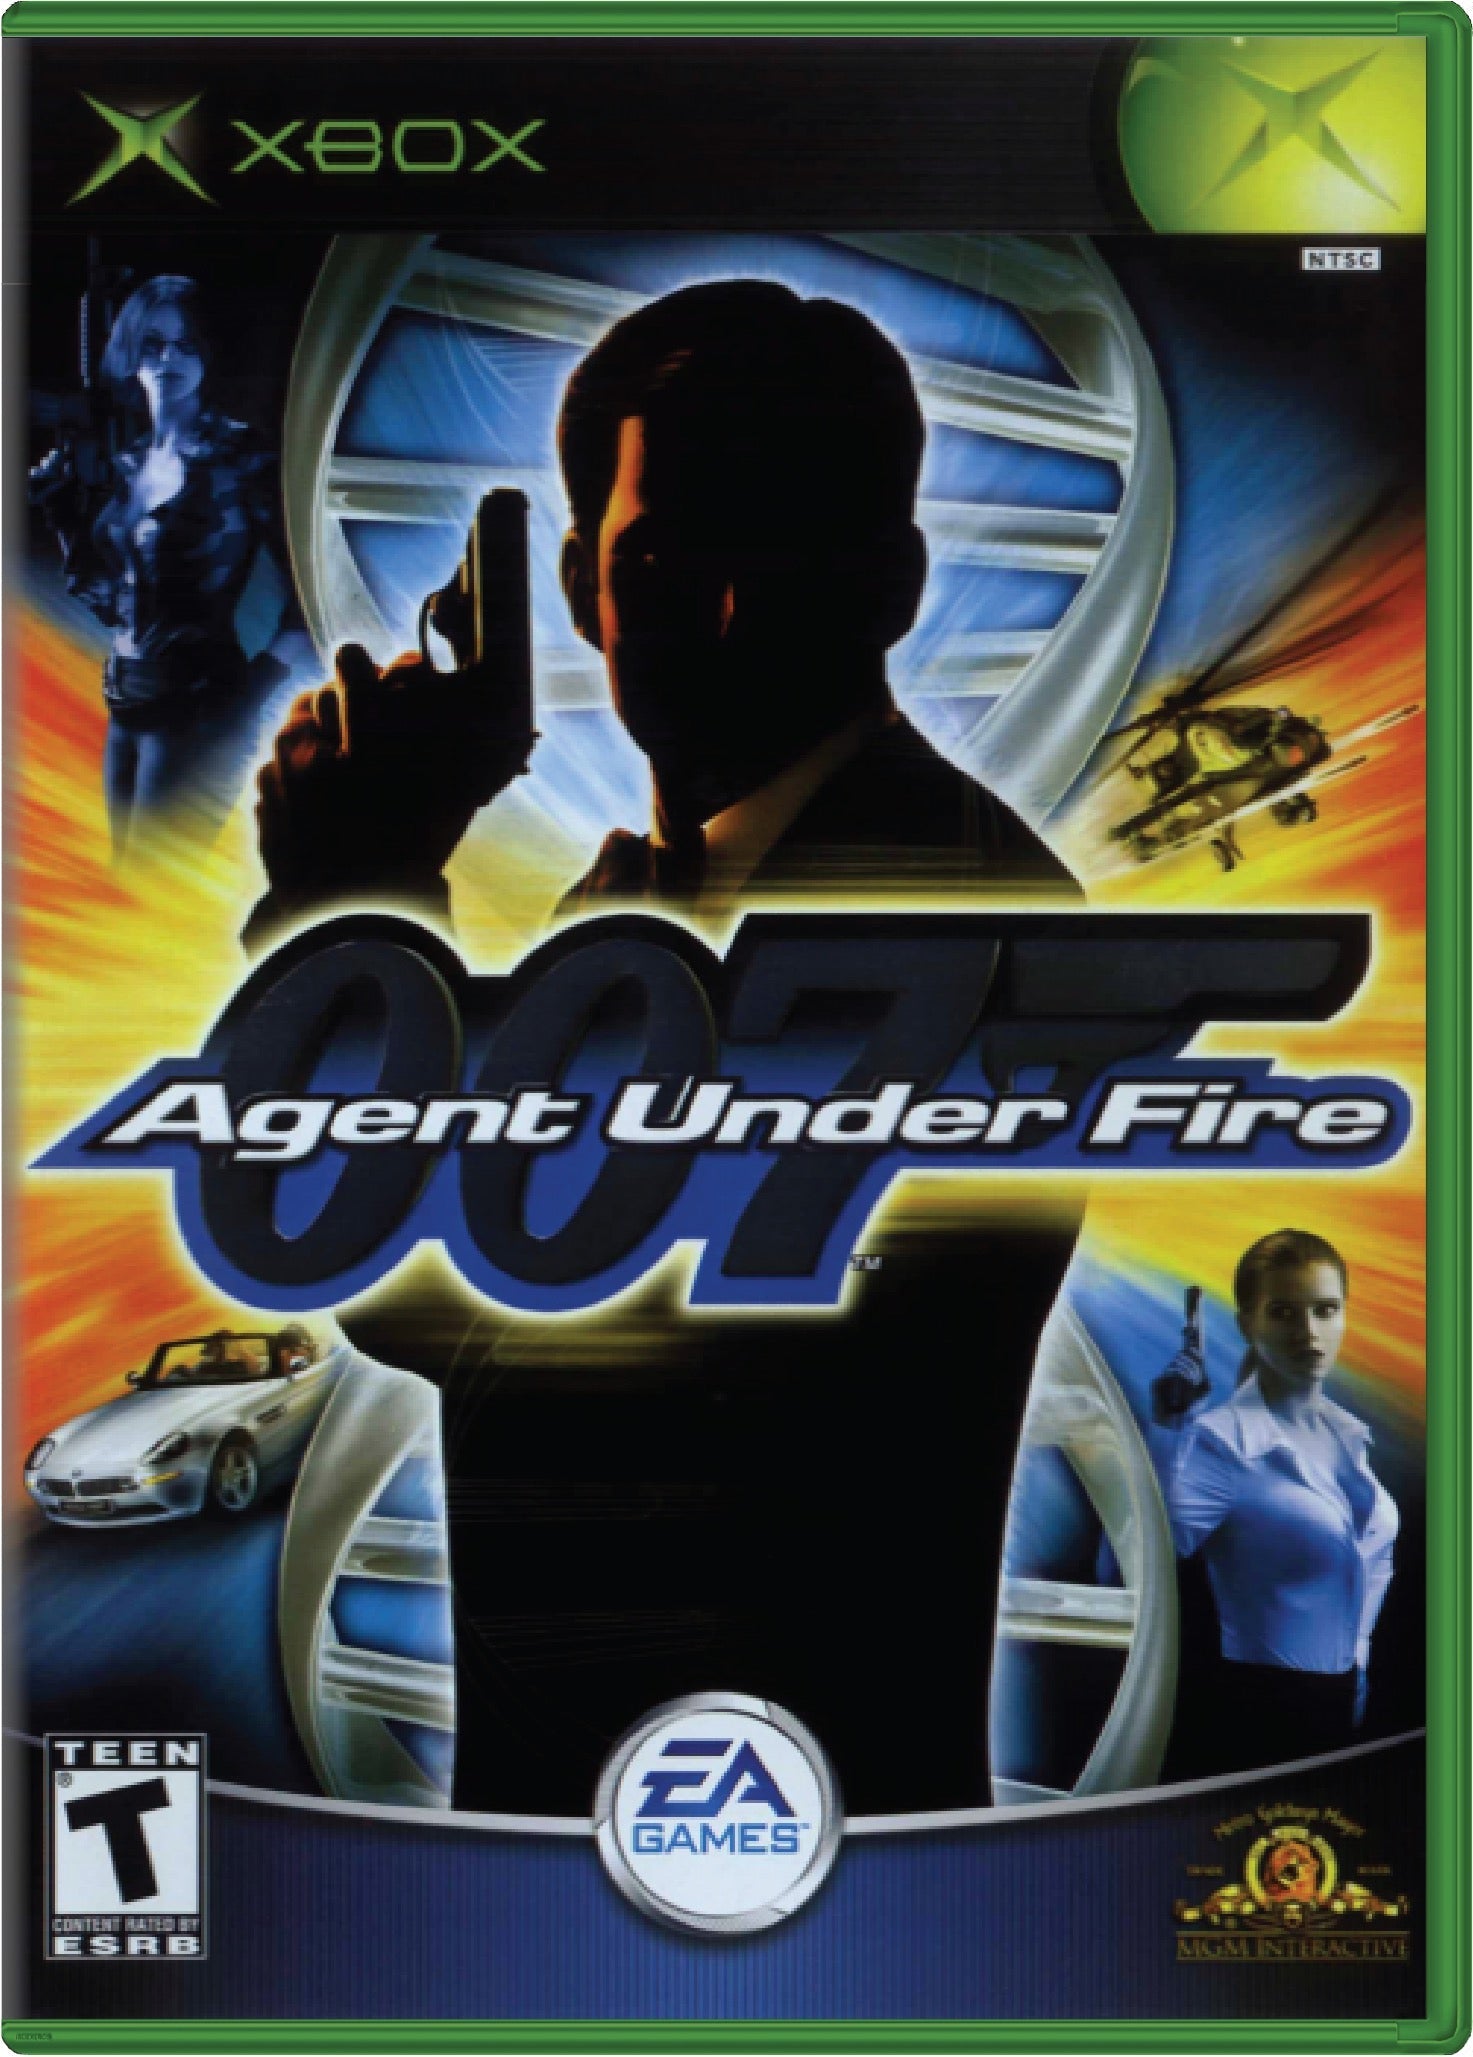 James Bond 007 Agent Under Fire Cover Art